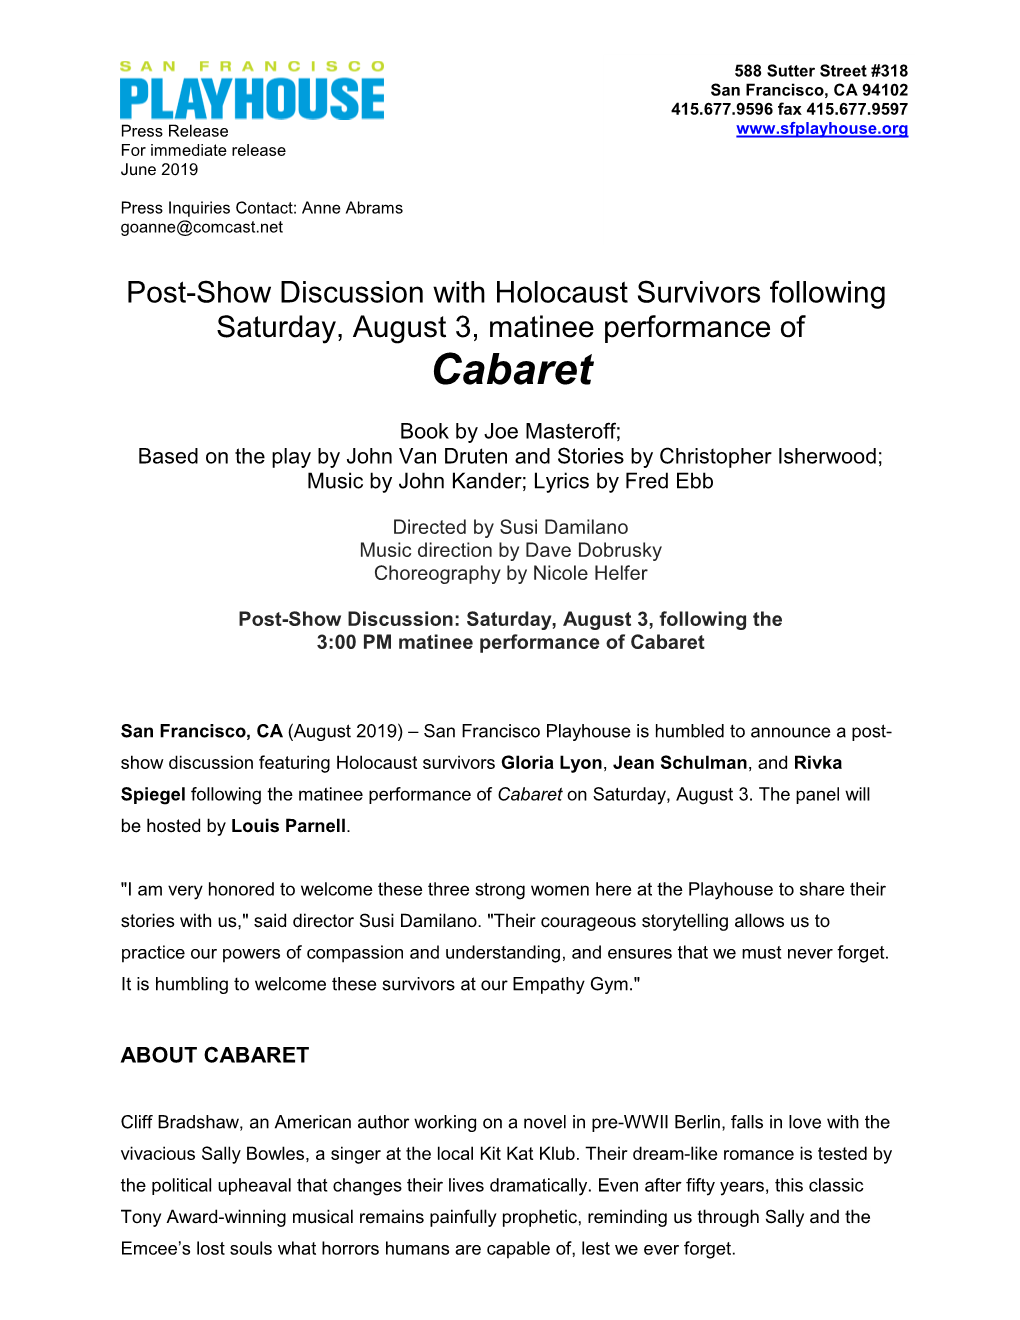 Cabaret – Post-Show Discussion with Holocaust Survivors